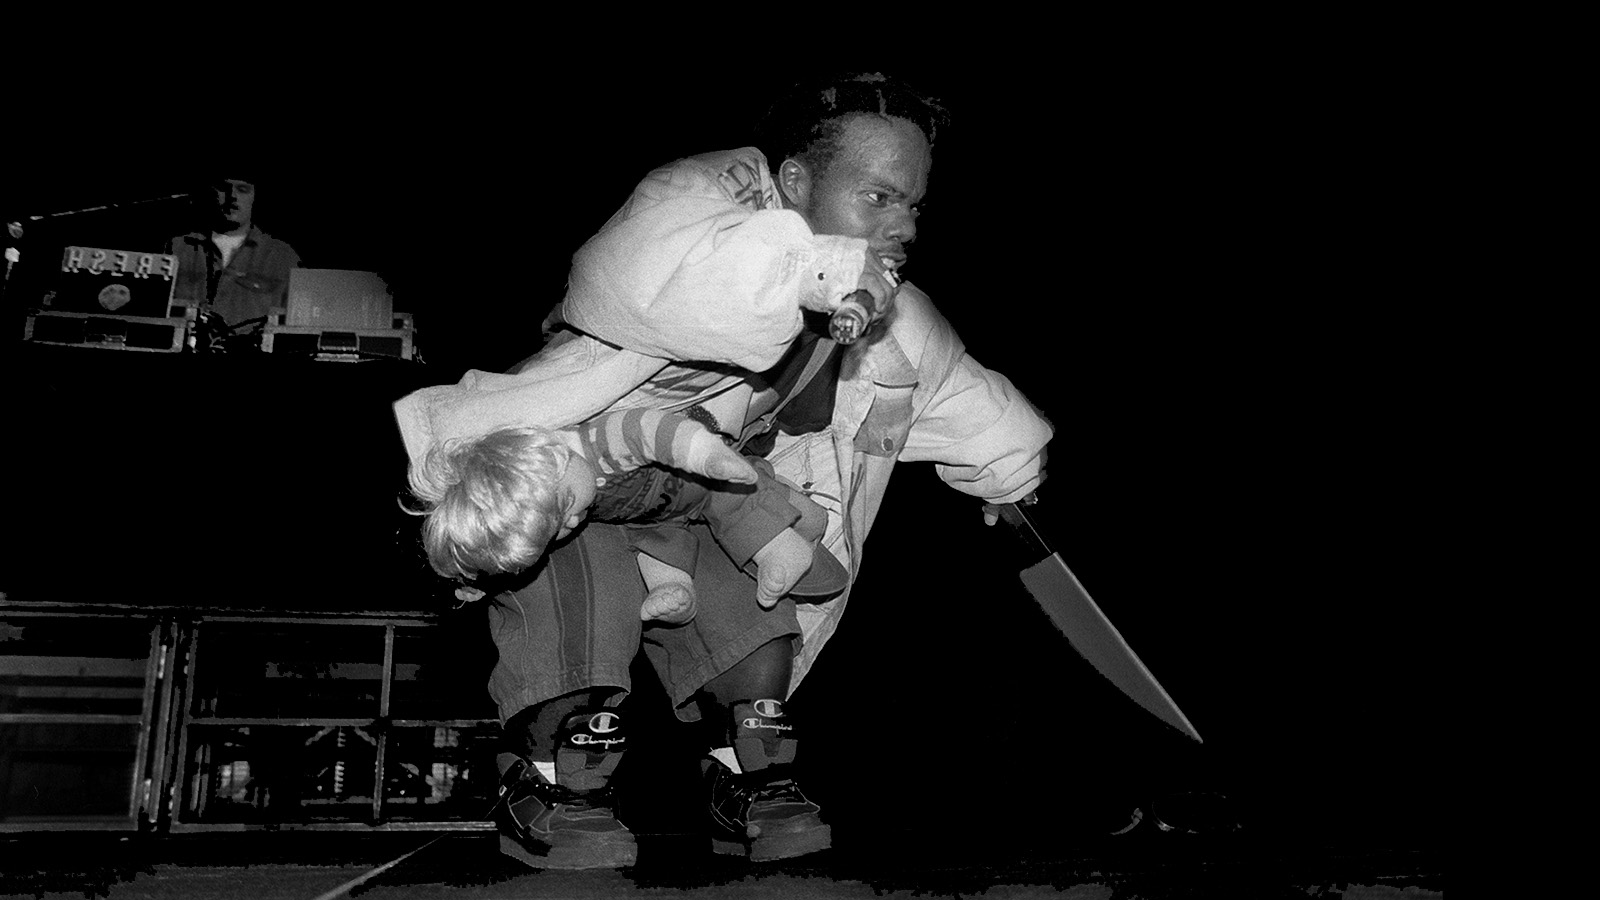 Bushwick Bill, Geto Boys Rapper and Horrorcore Pioneer, Dead at 52